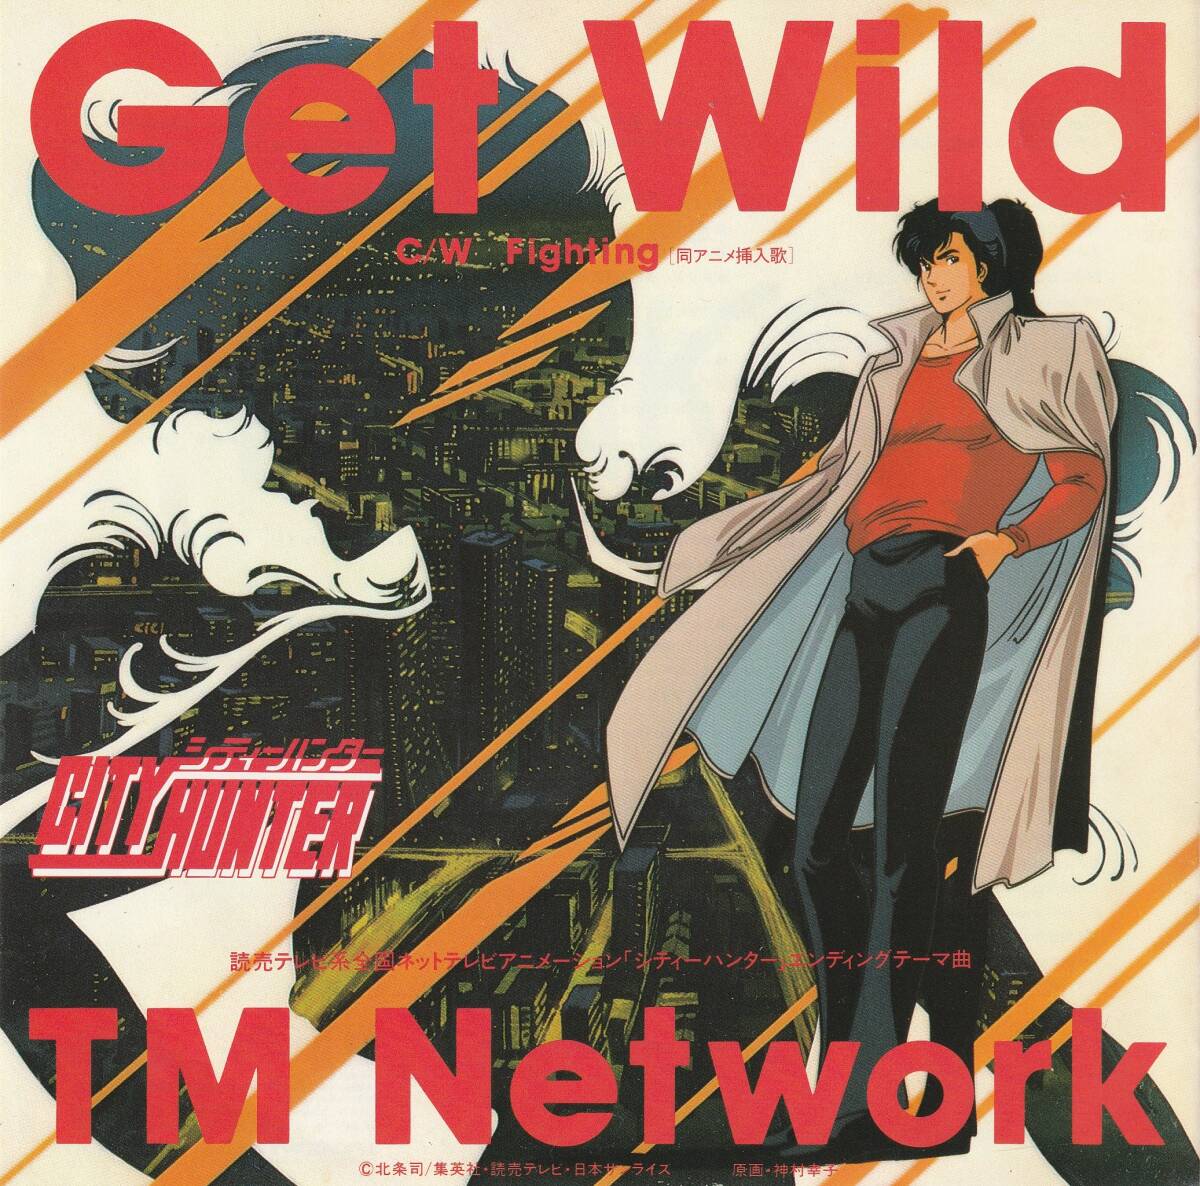  City Hunter Get Wild.)TM Network EP запись 1987